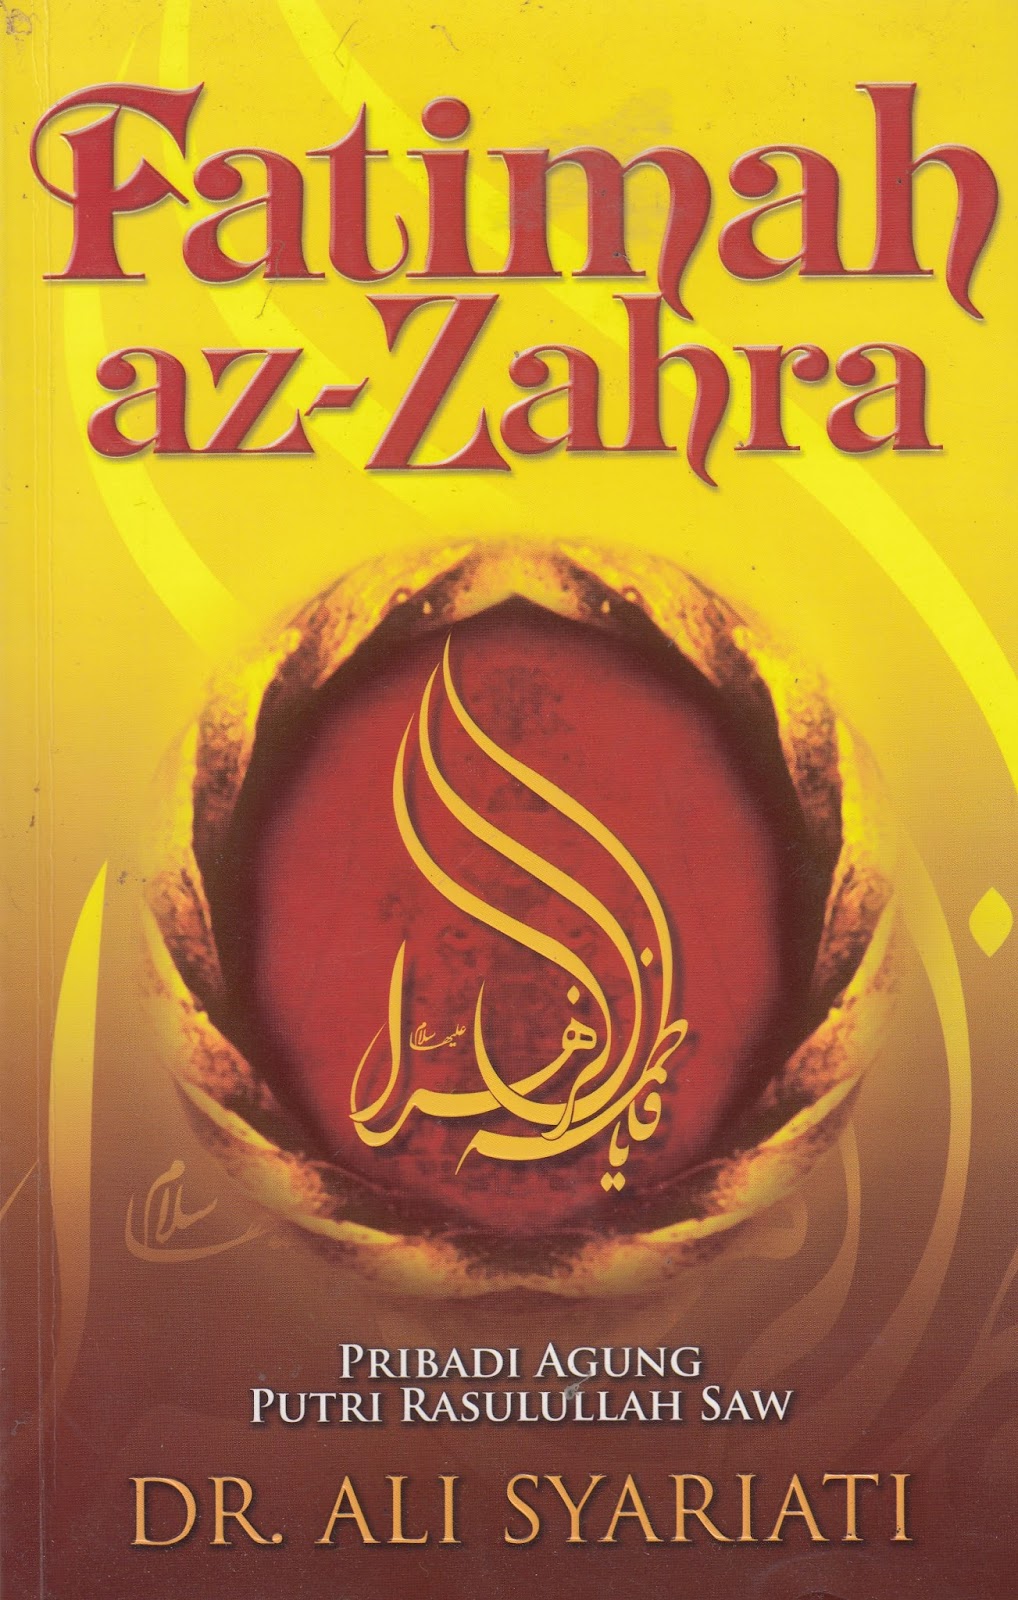 Penyimpangan Syiah dalam Buku "Fatimah Az-Zahra: Pribadi Agung Putri